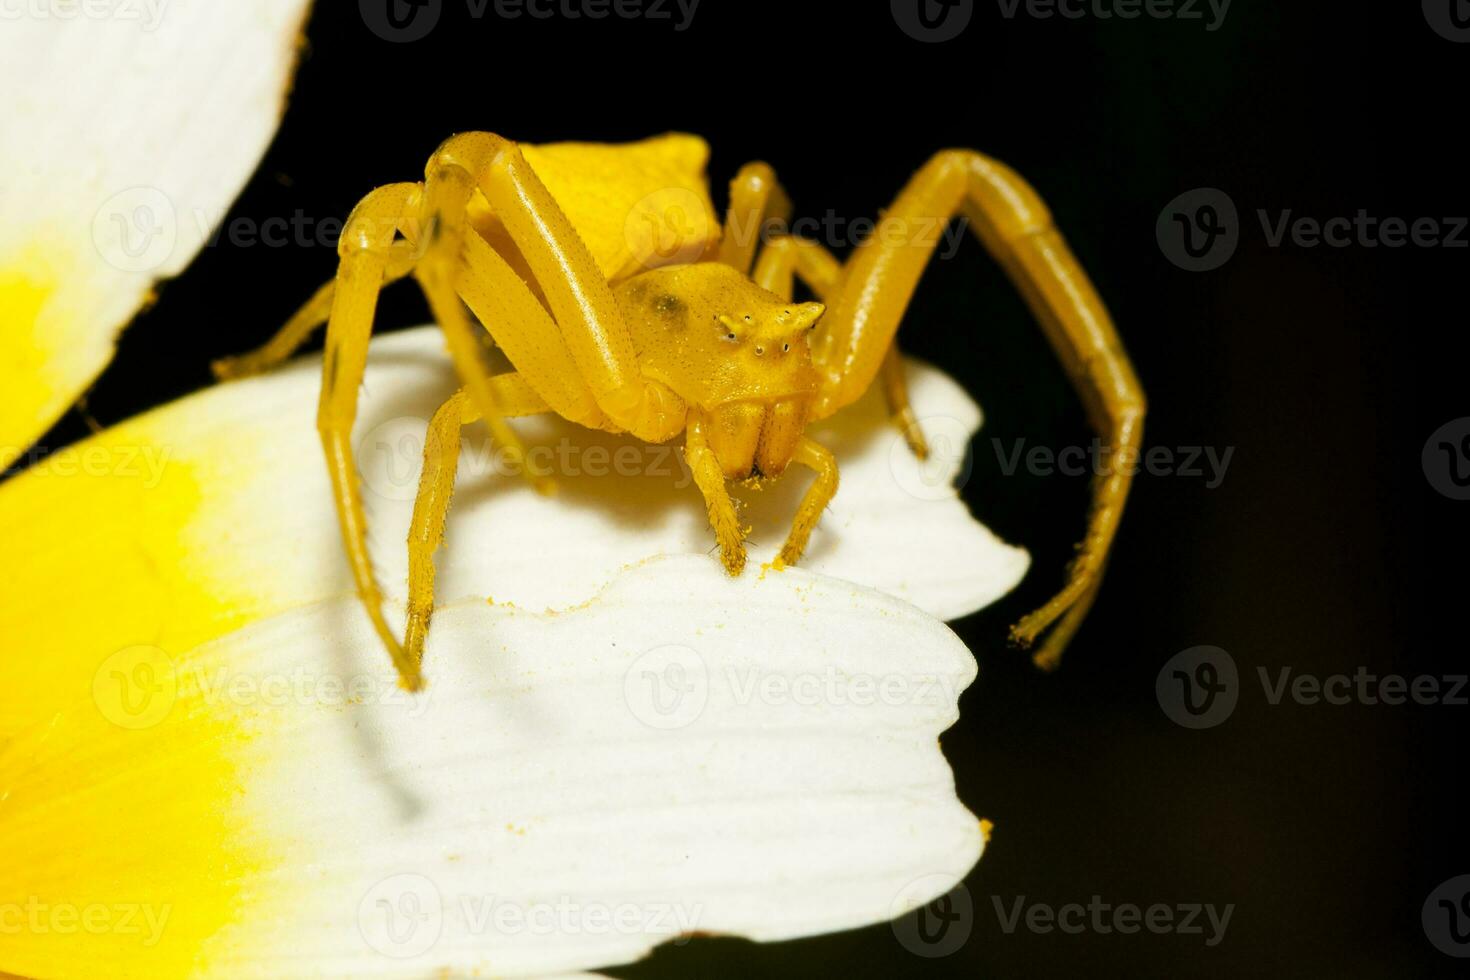 amarillo cangrejo araña - thomisus responsabilidad foto